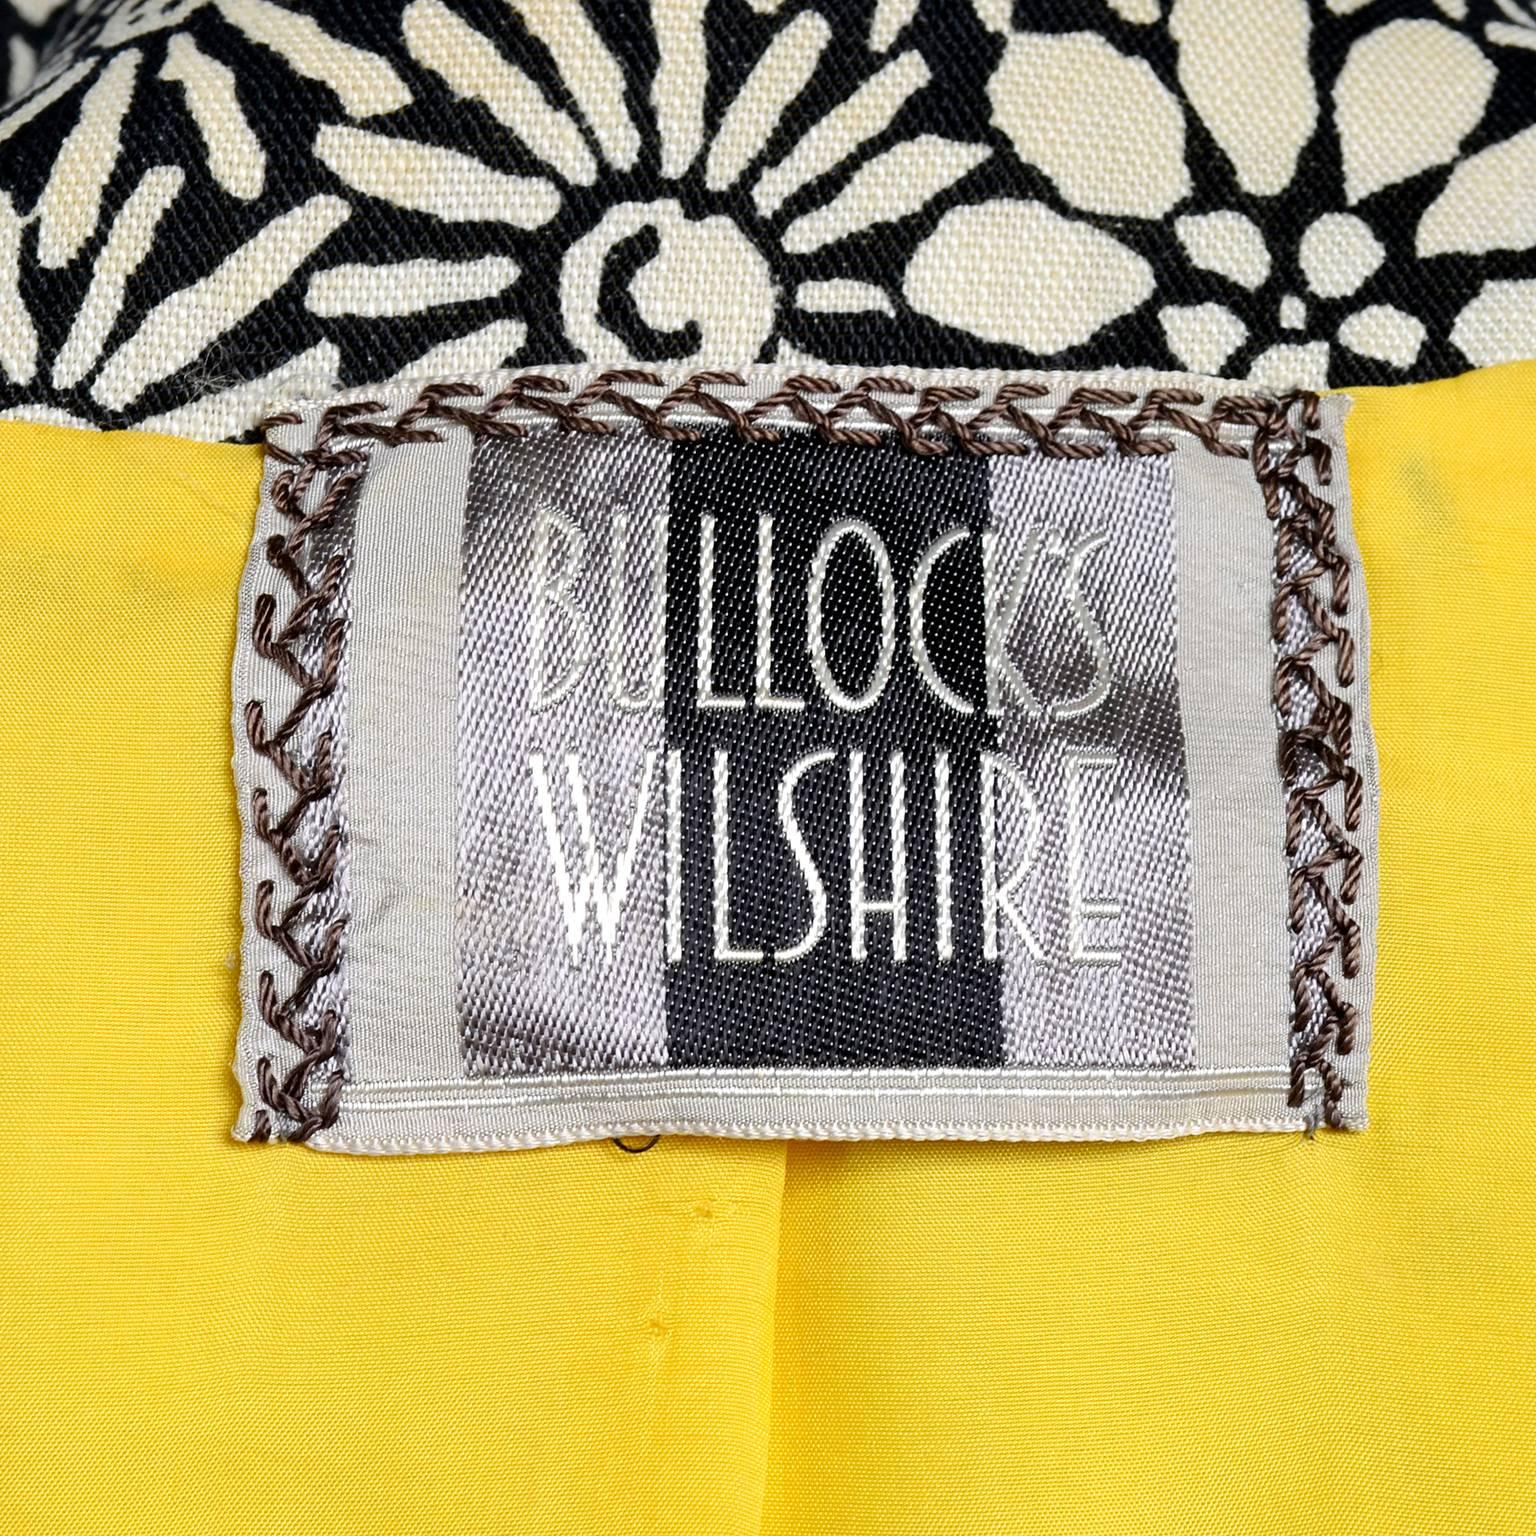 Bullocks Wilshire 1960s Skirt Suit in Floral Linen Print W Marigold Yellow Trim 2